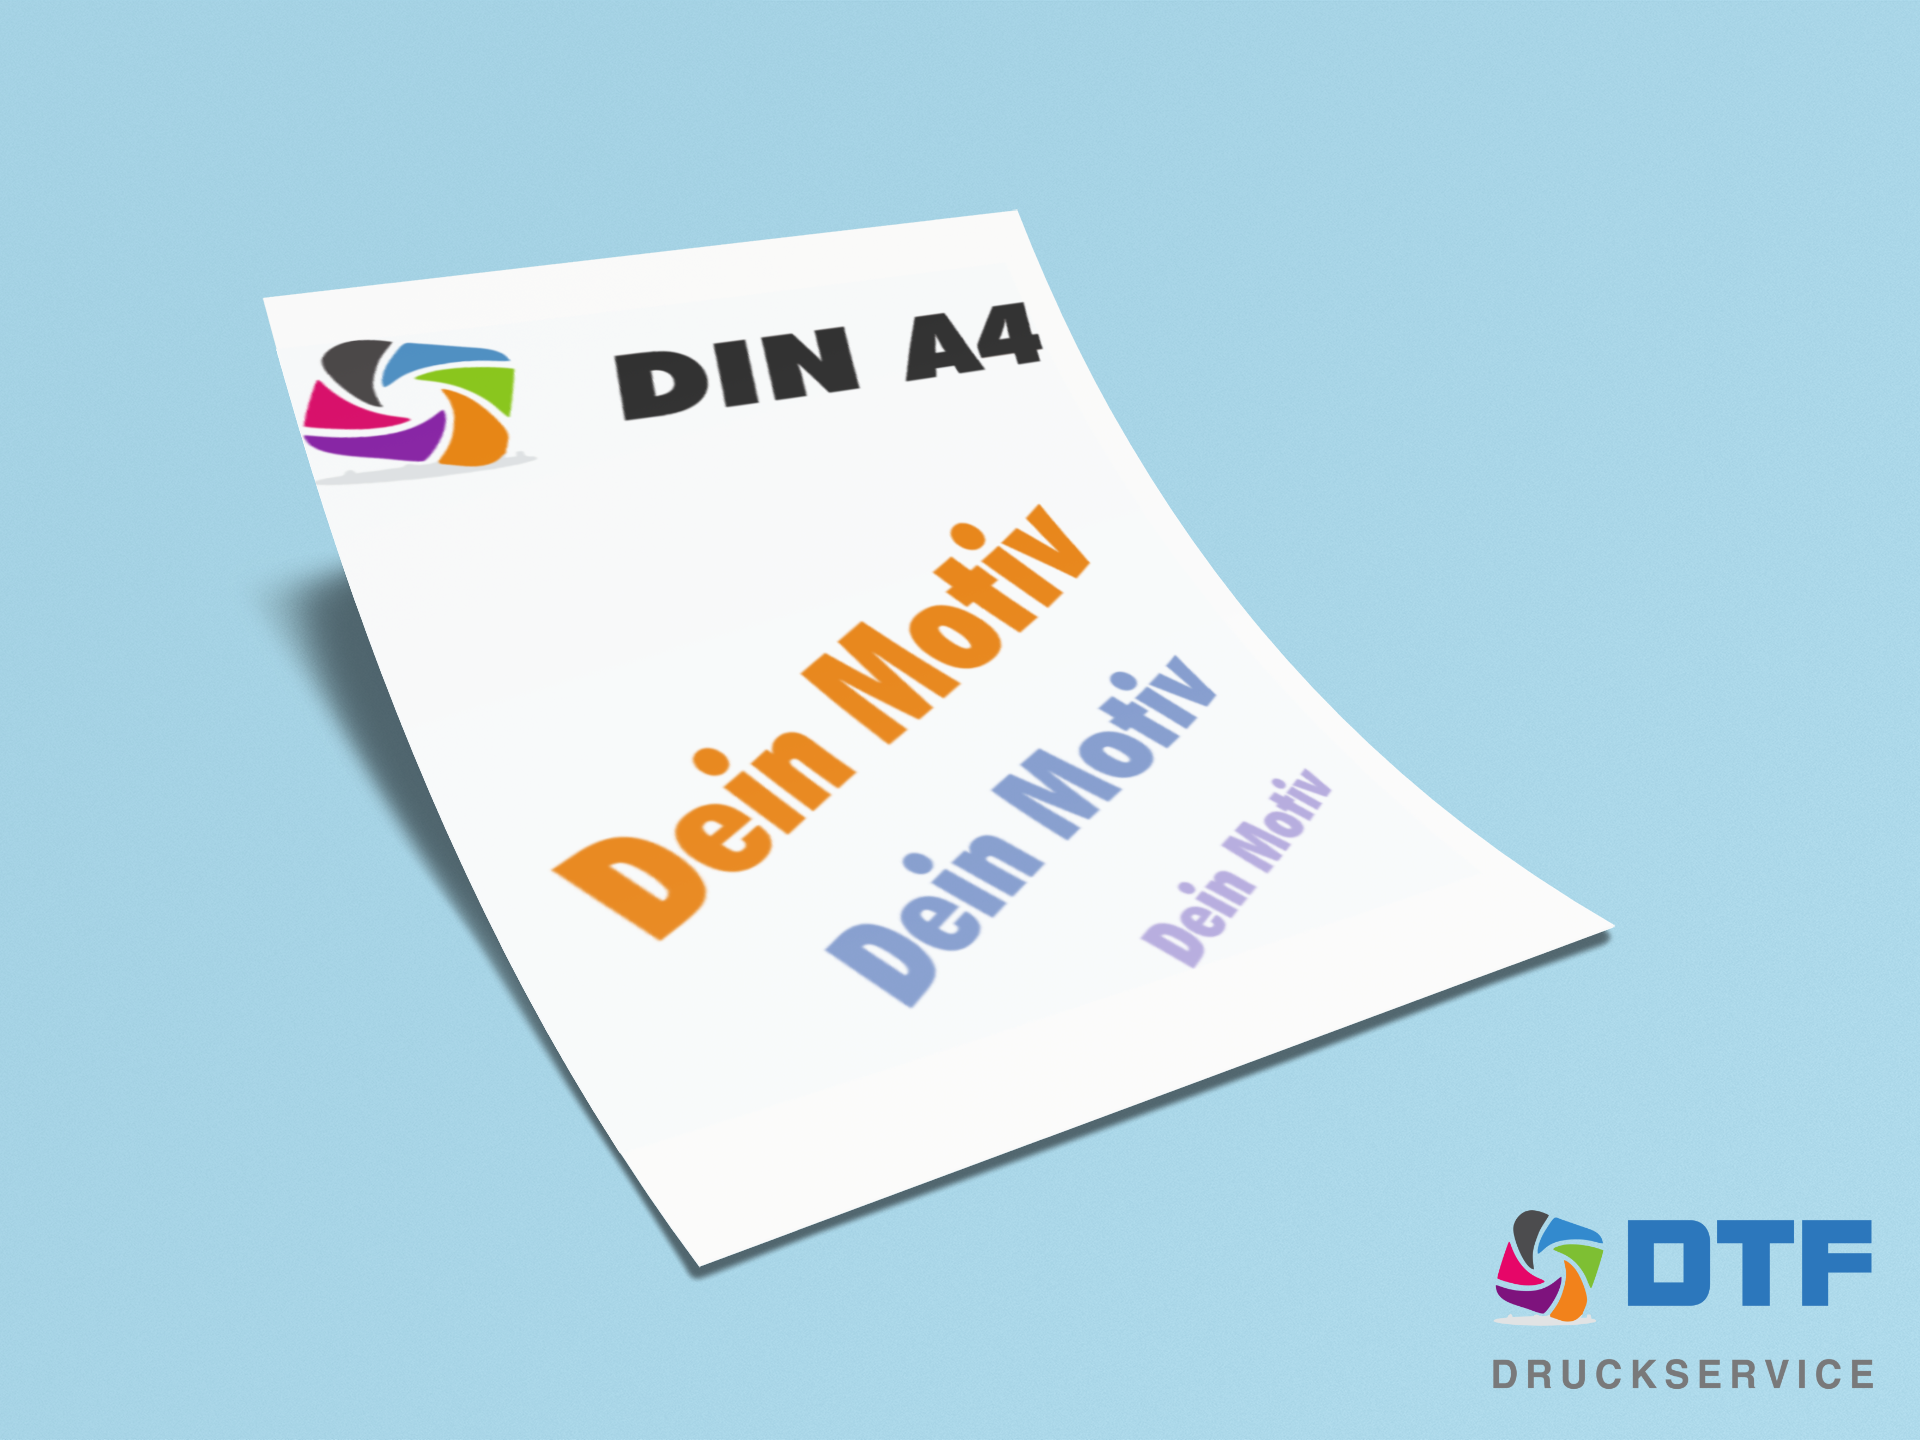 DTF - DIN A4